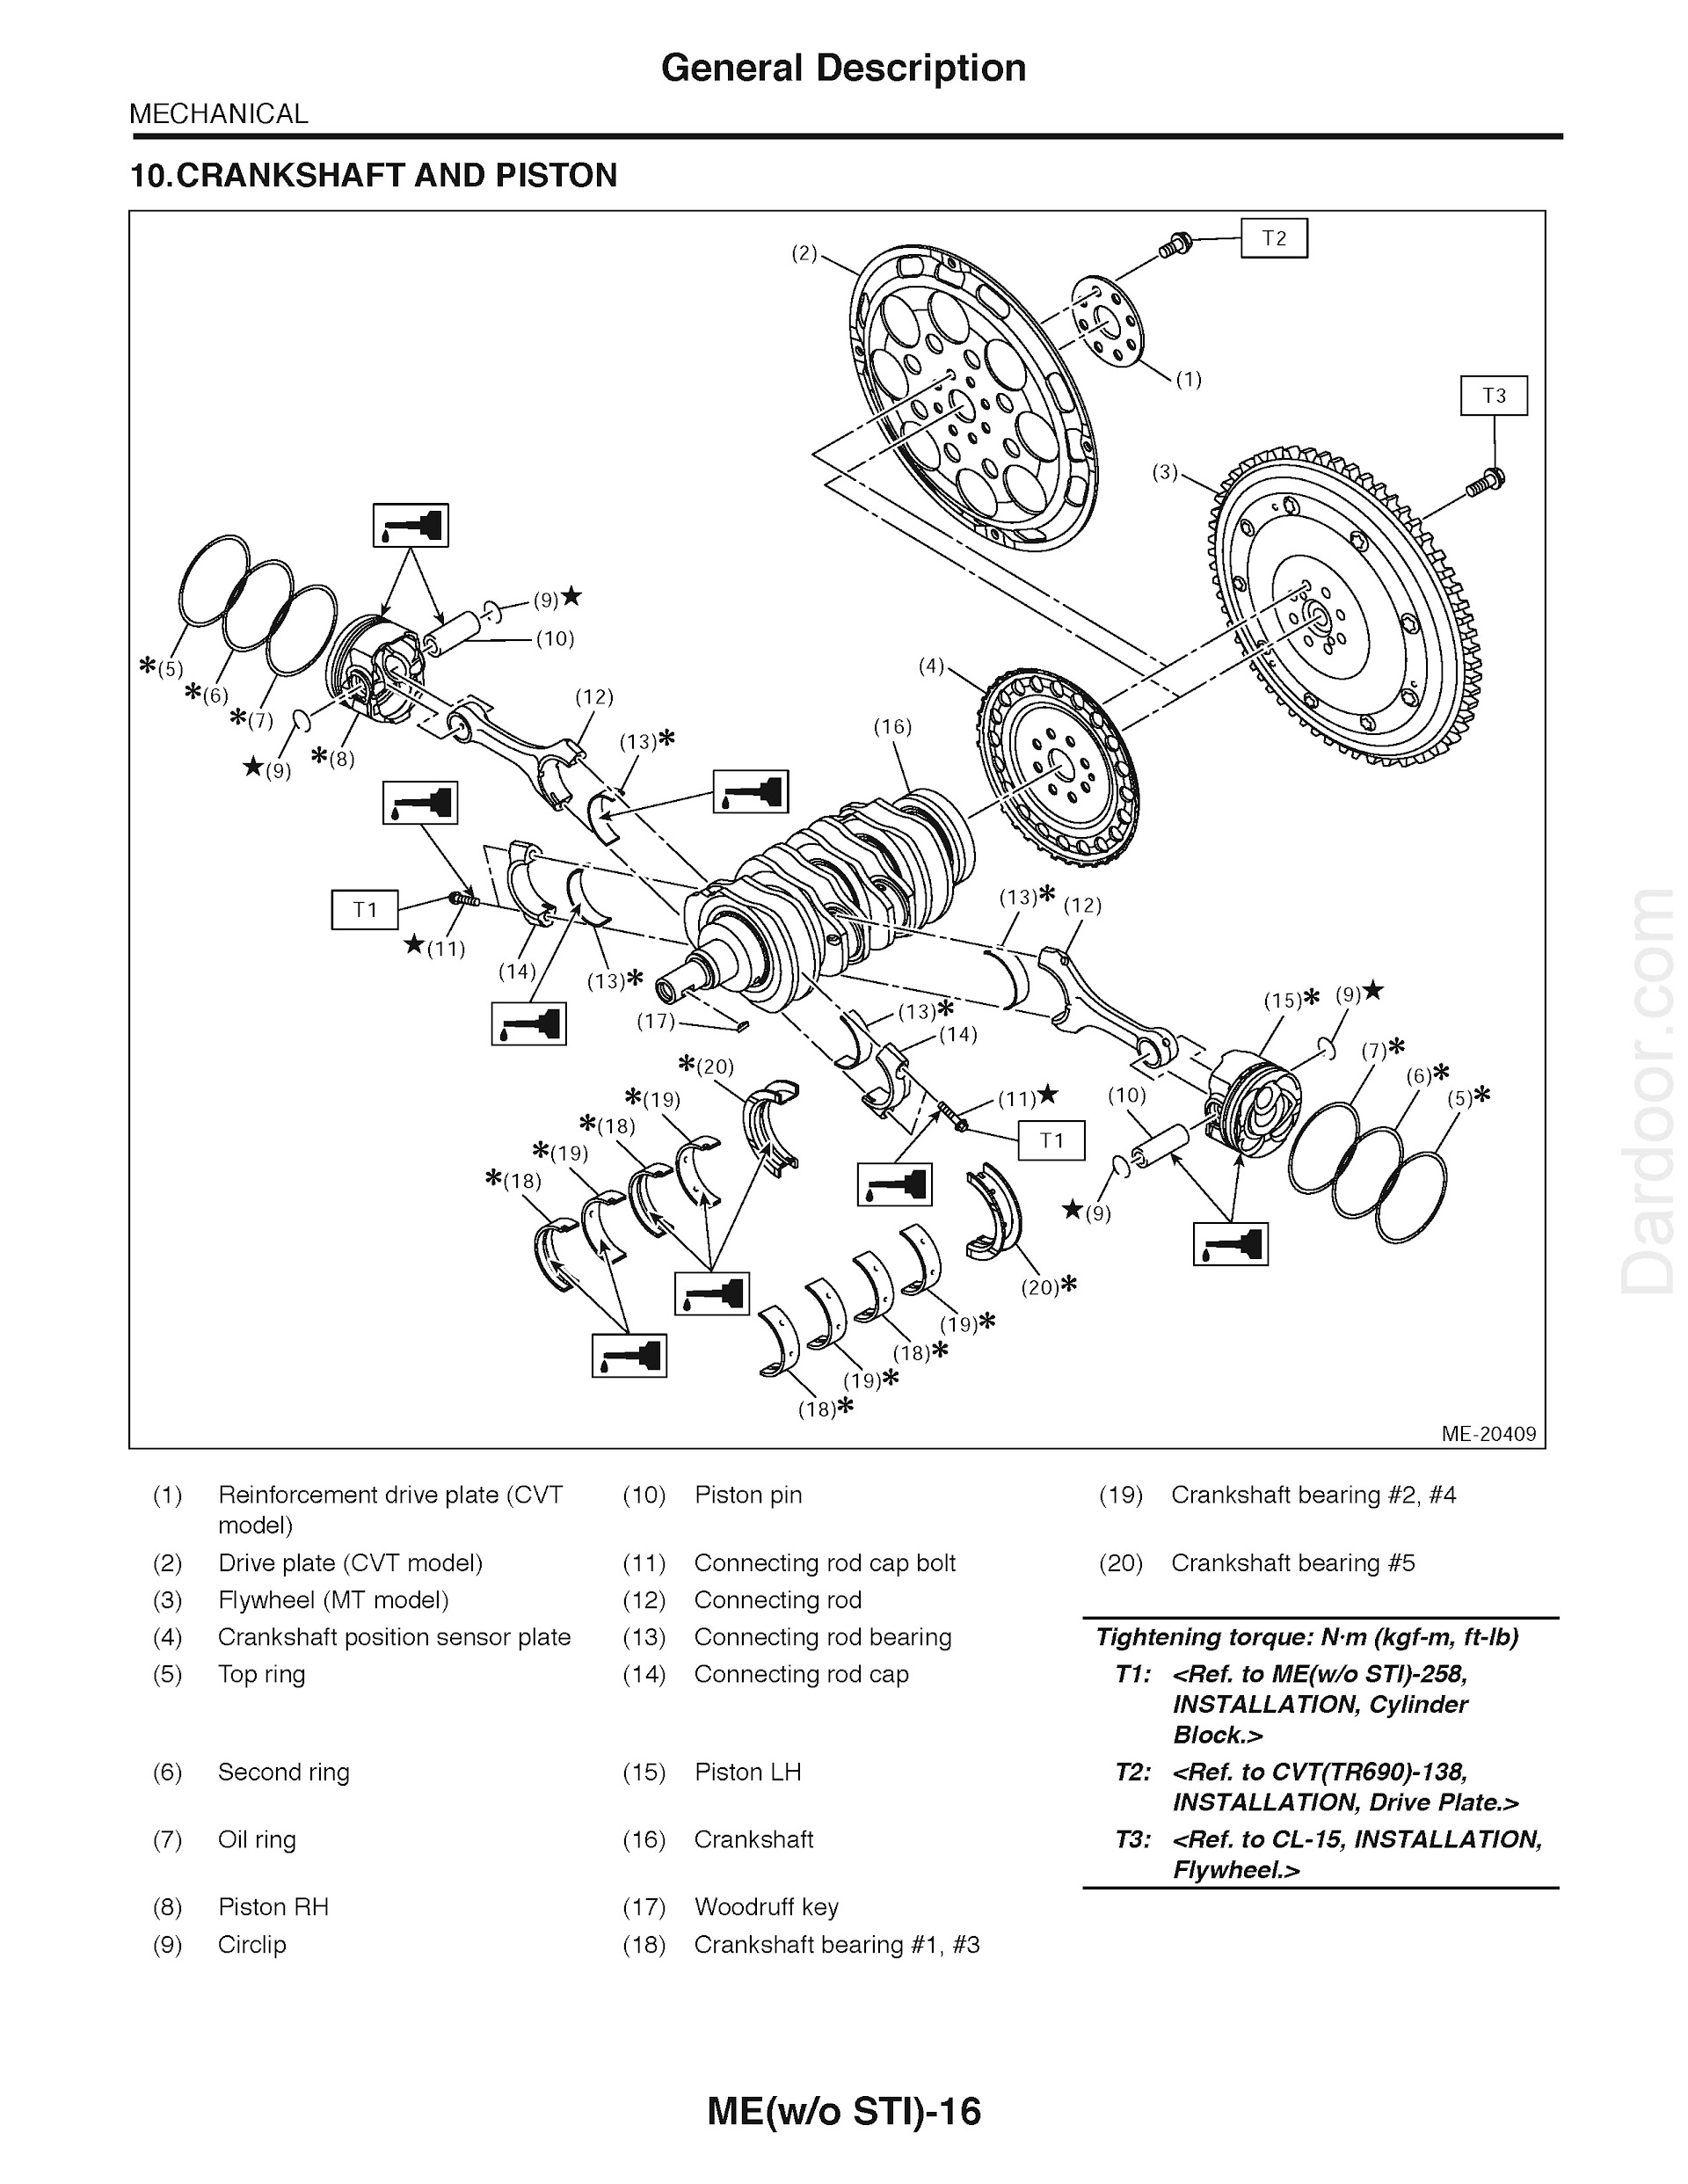 2017 Subaru WRX and WRX STI Repair Manual, Crankshaft and Piston